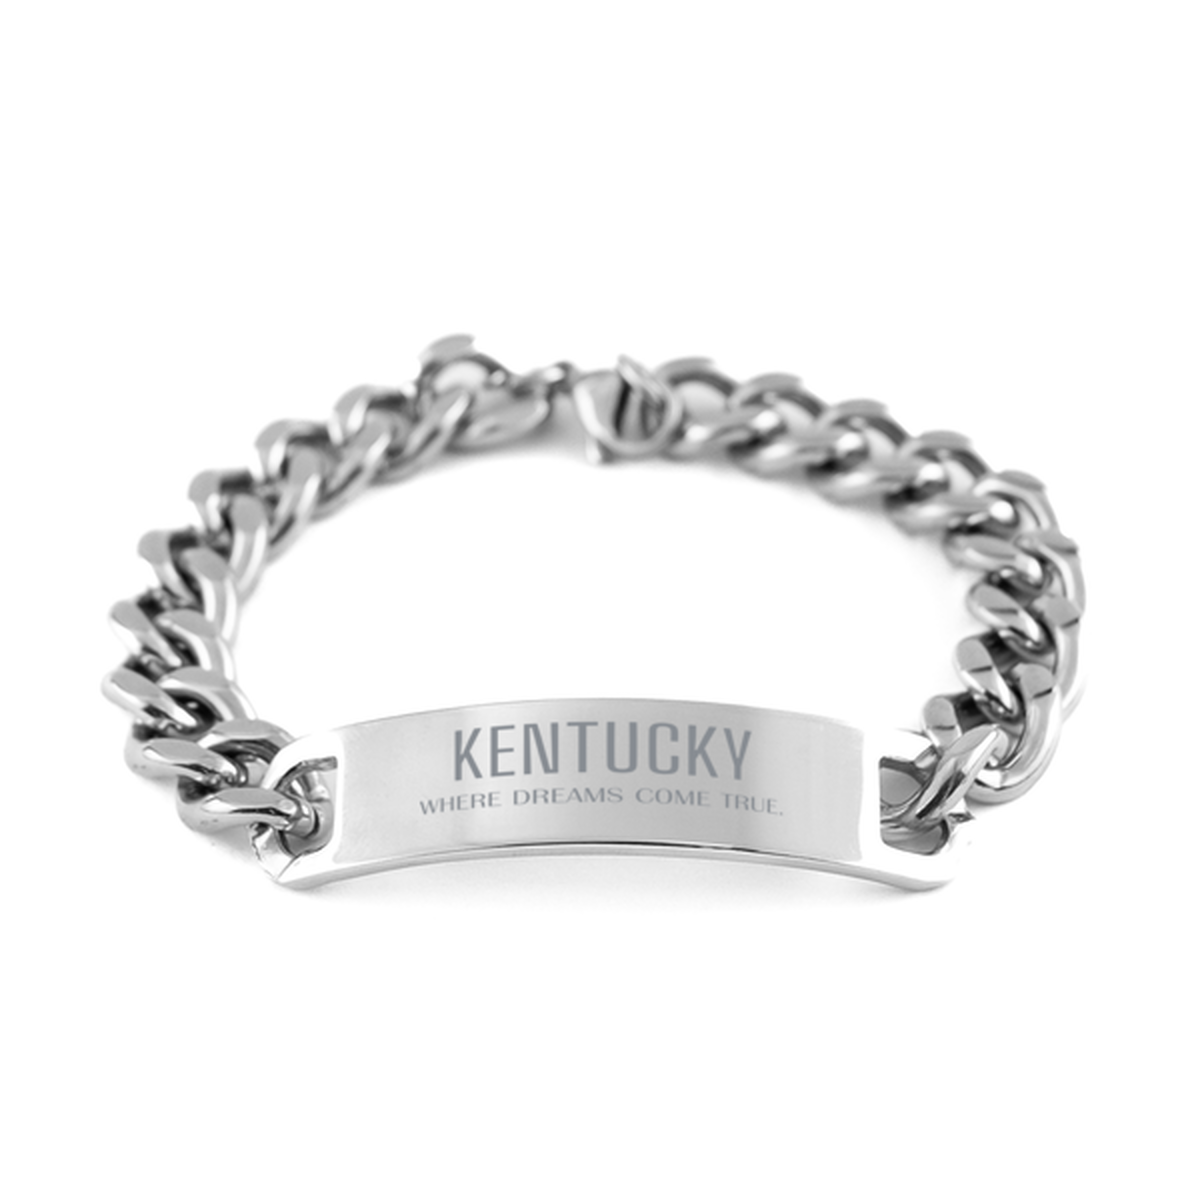 Love Kentucky State Cuban Chain Stainless Steel Bracelet, Kentucky Where dreams come true, Birthday Inspirational Gifts For Kentucky Men, Women, Friends